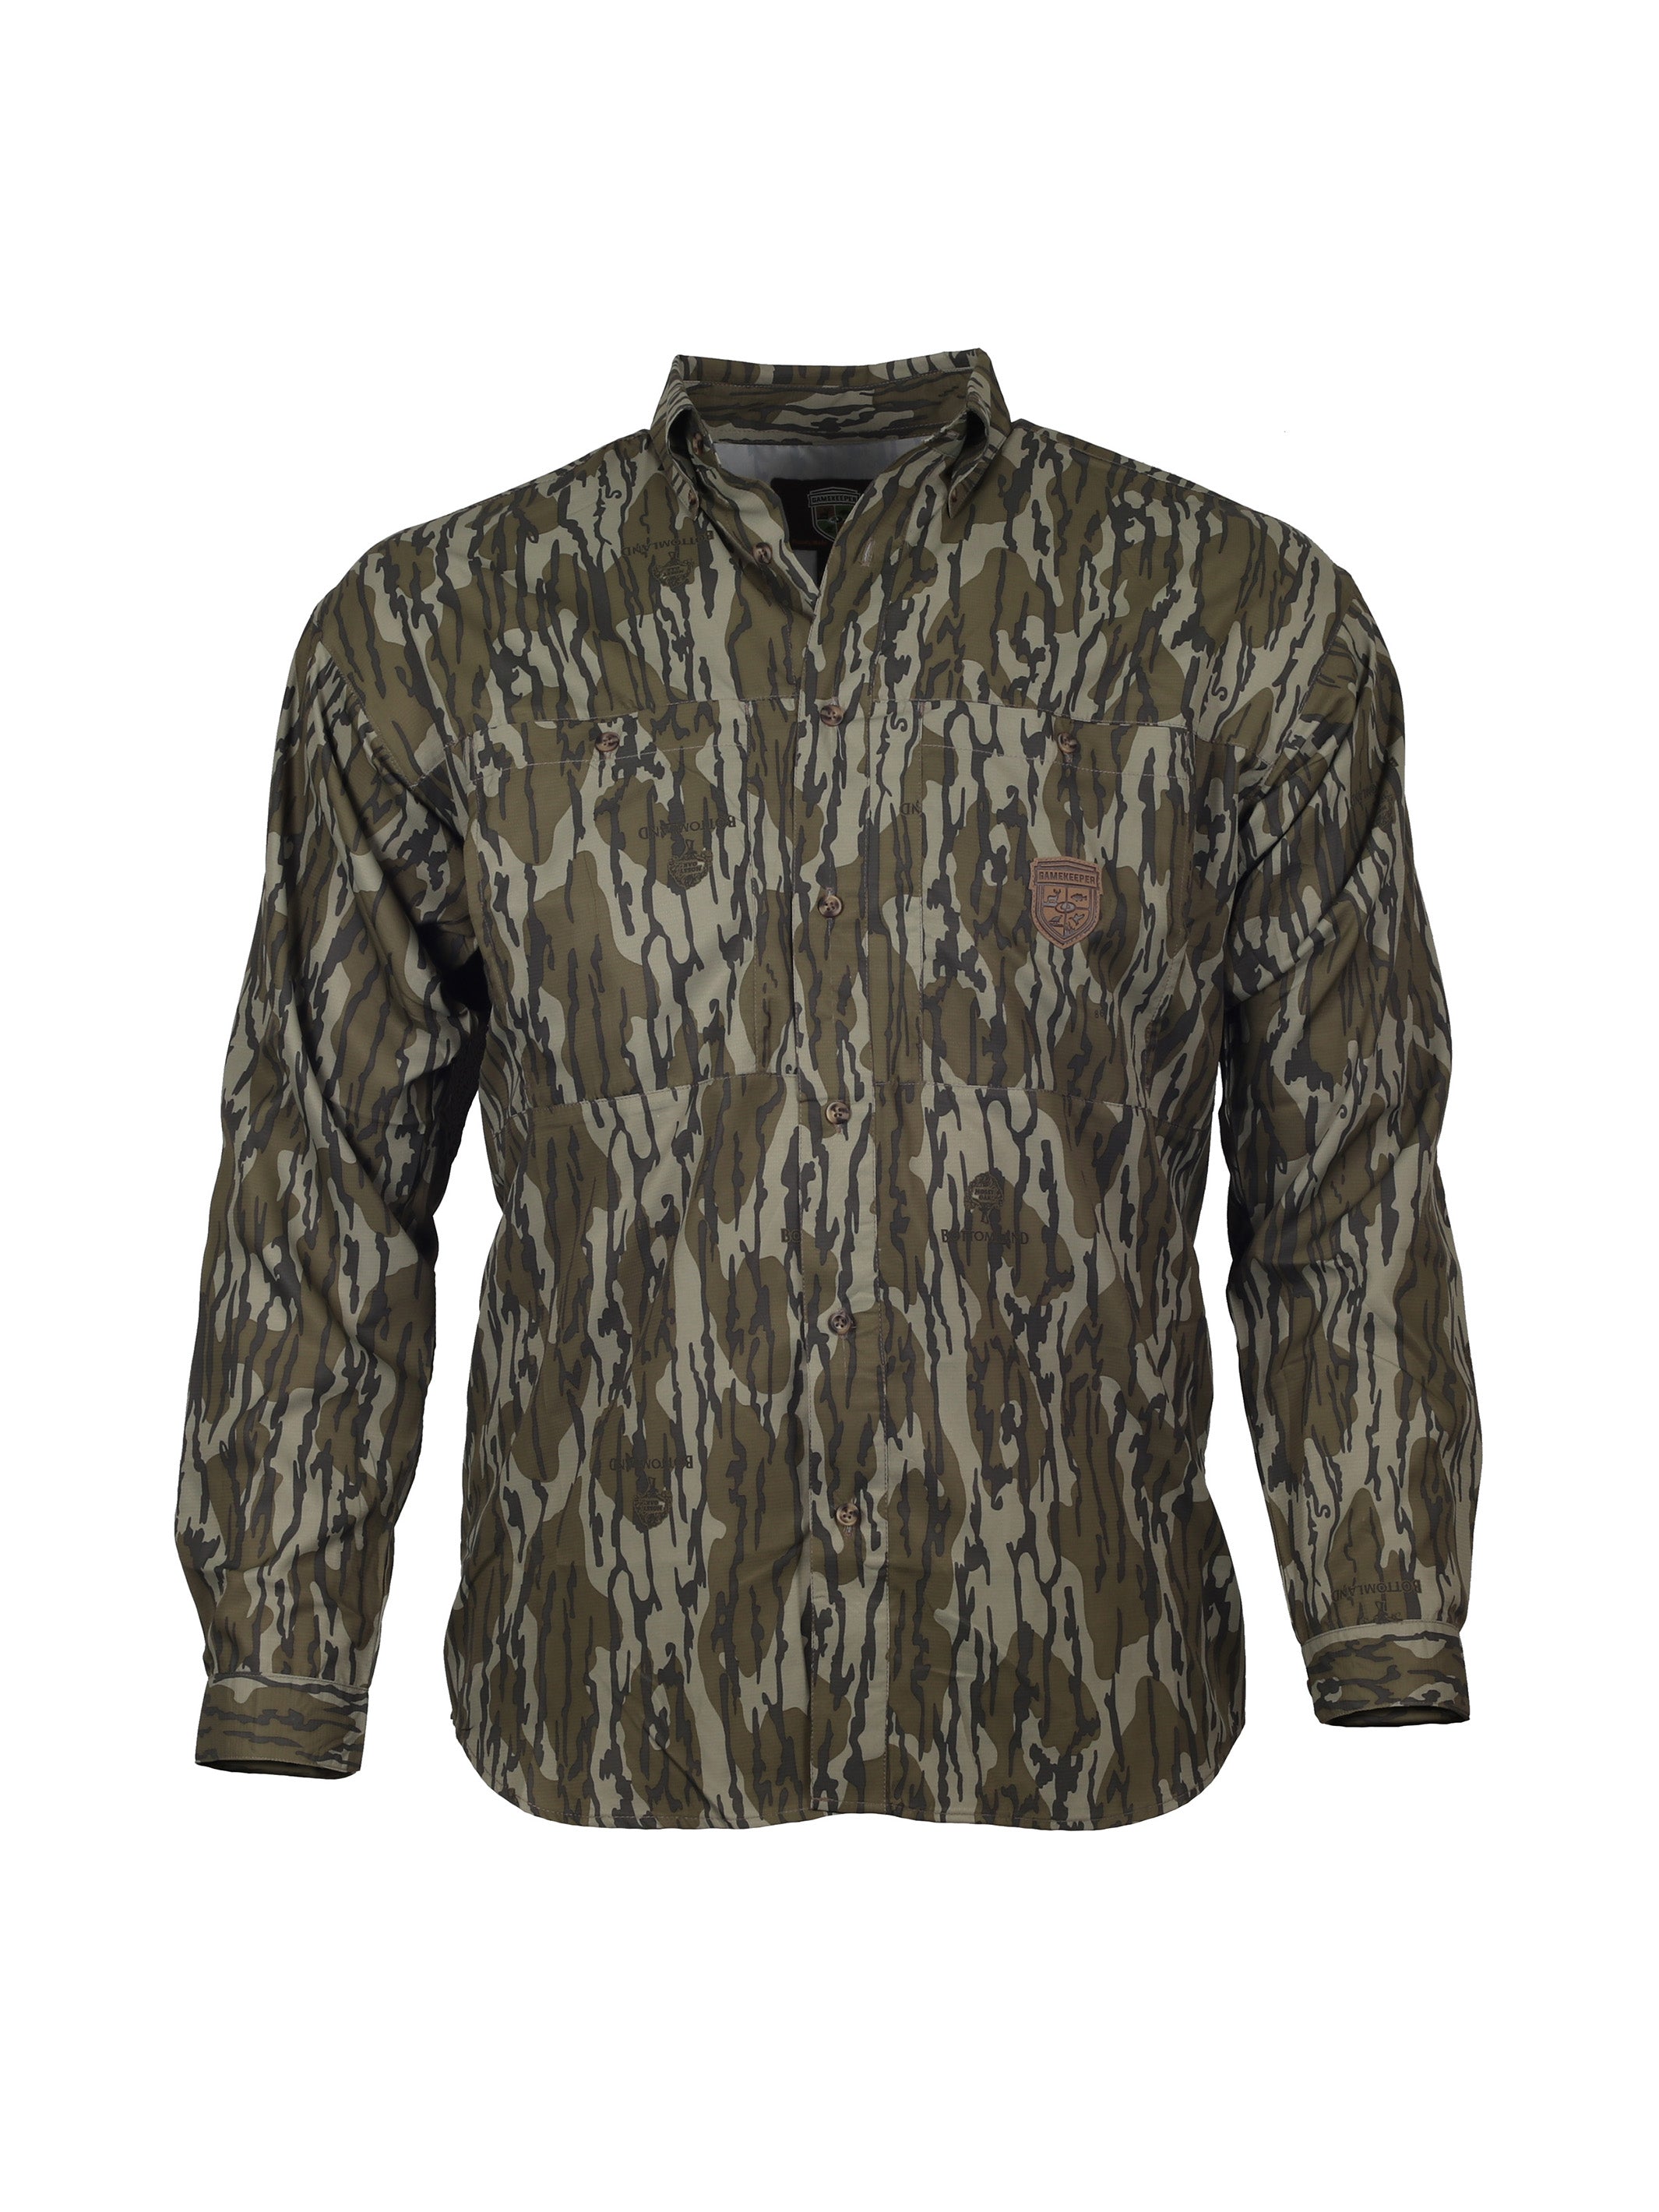 NTN Long Sleeve Button Down Shirt - 113720BTD - Mossy Oak Original Bottomland Camo